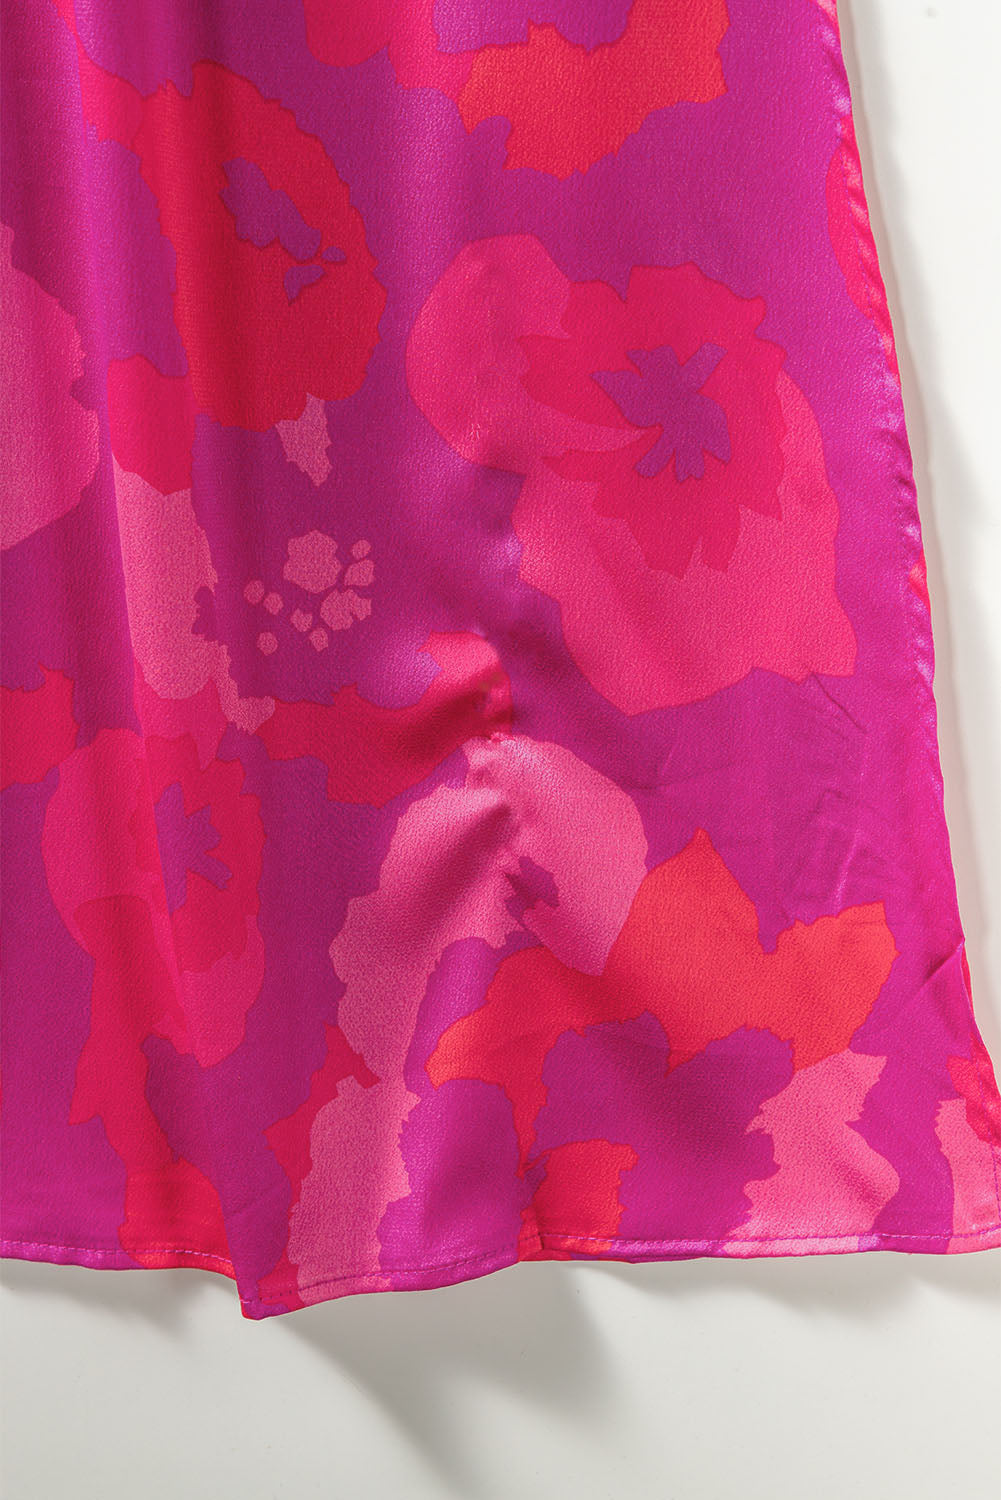 Rose Abstract Floral Print V Neck Dolman Maxi Dress - SELFTRITSS